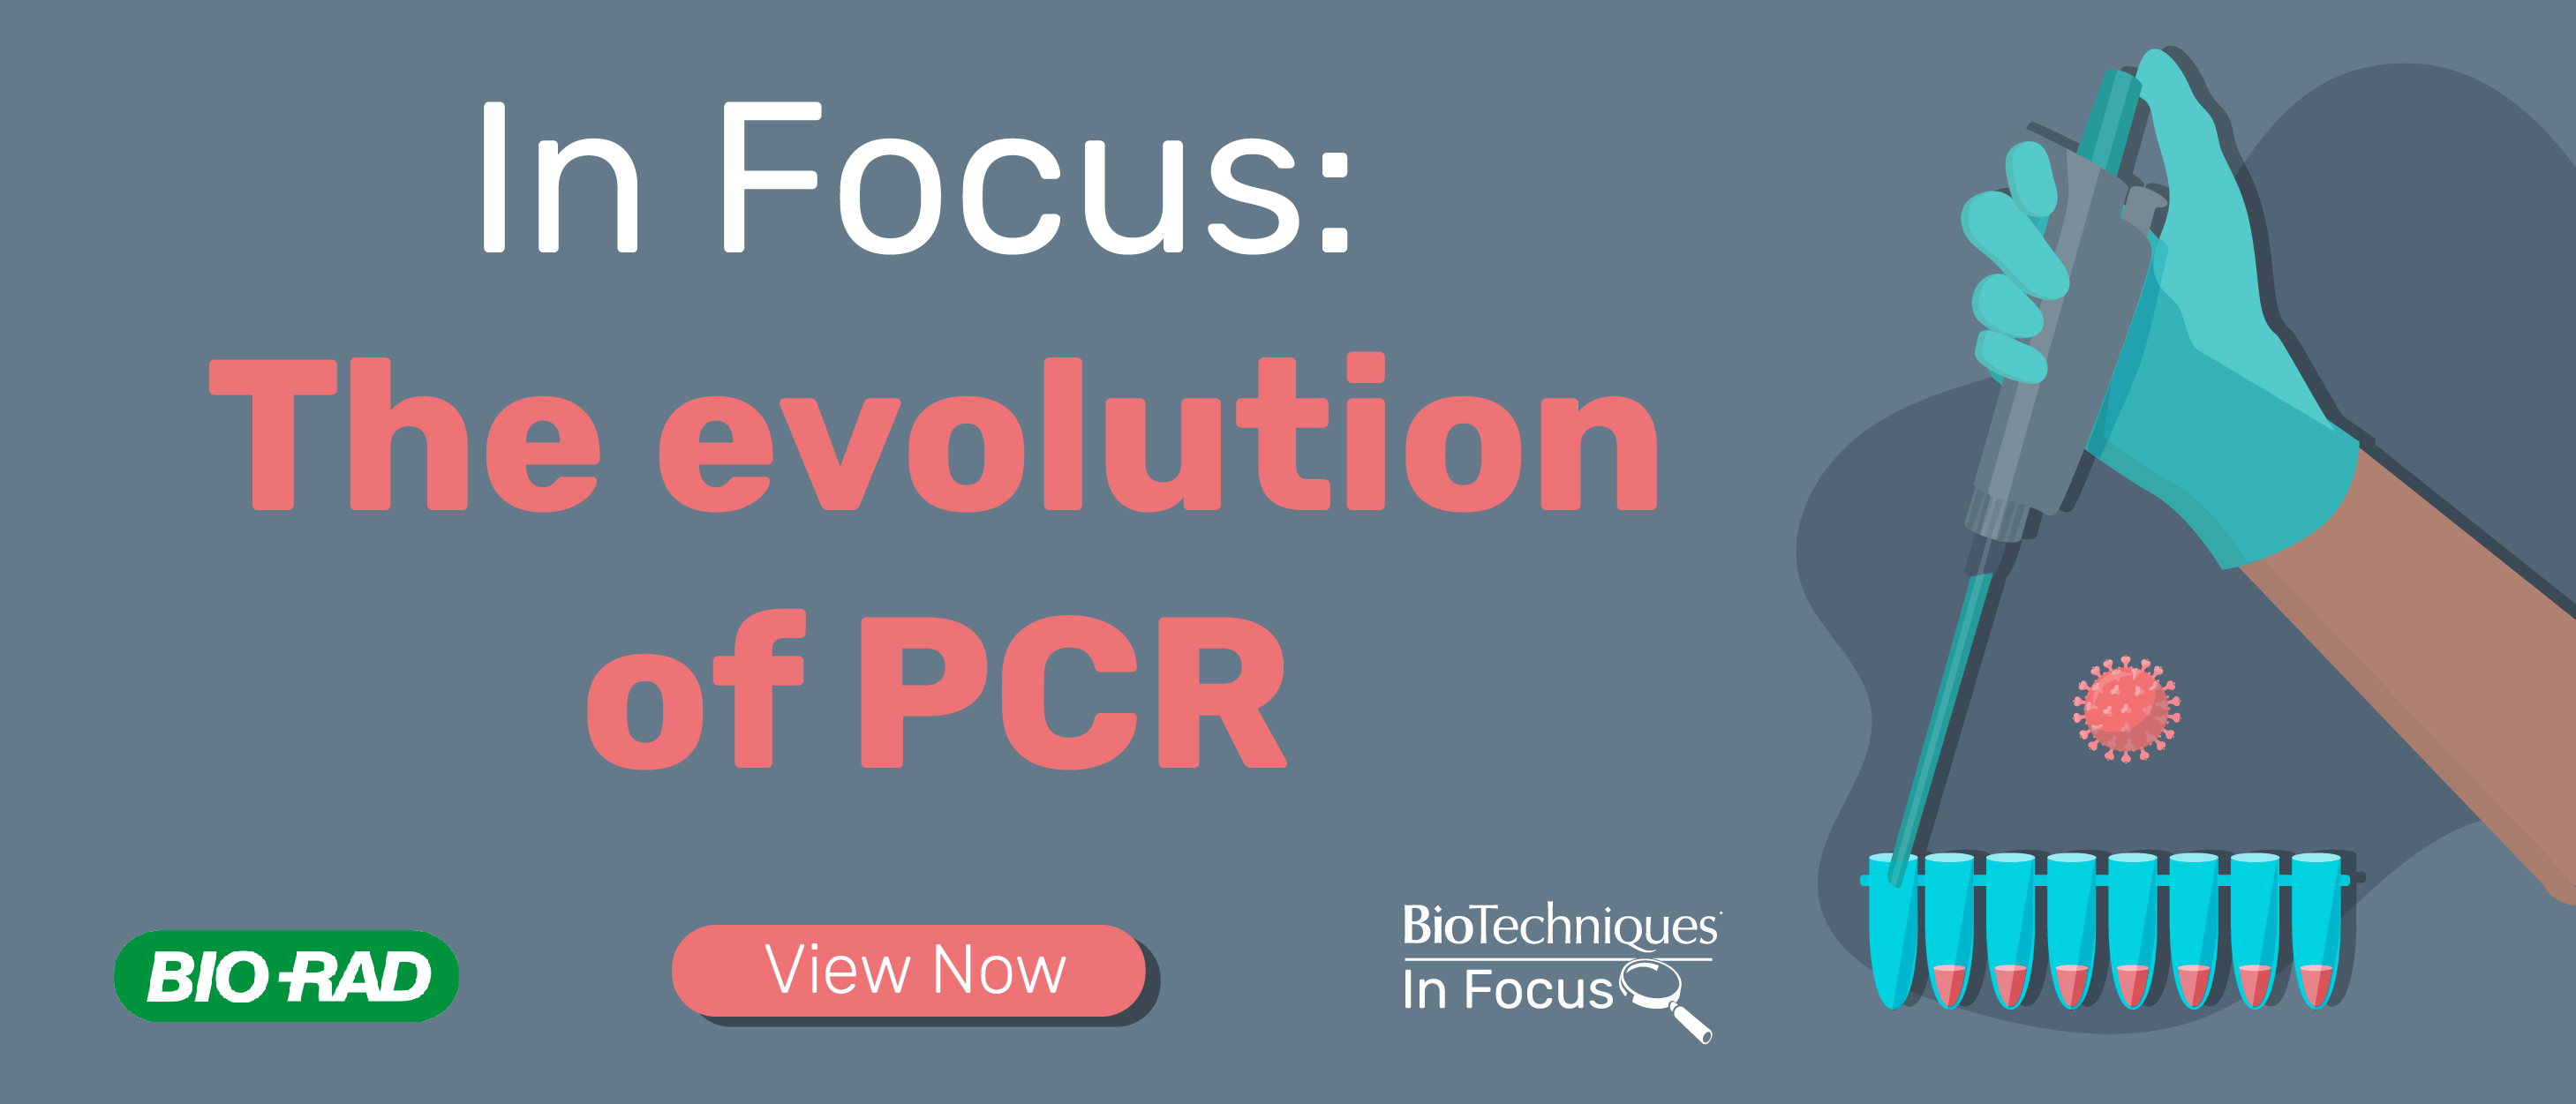 In Focus: The evolution of PCR